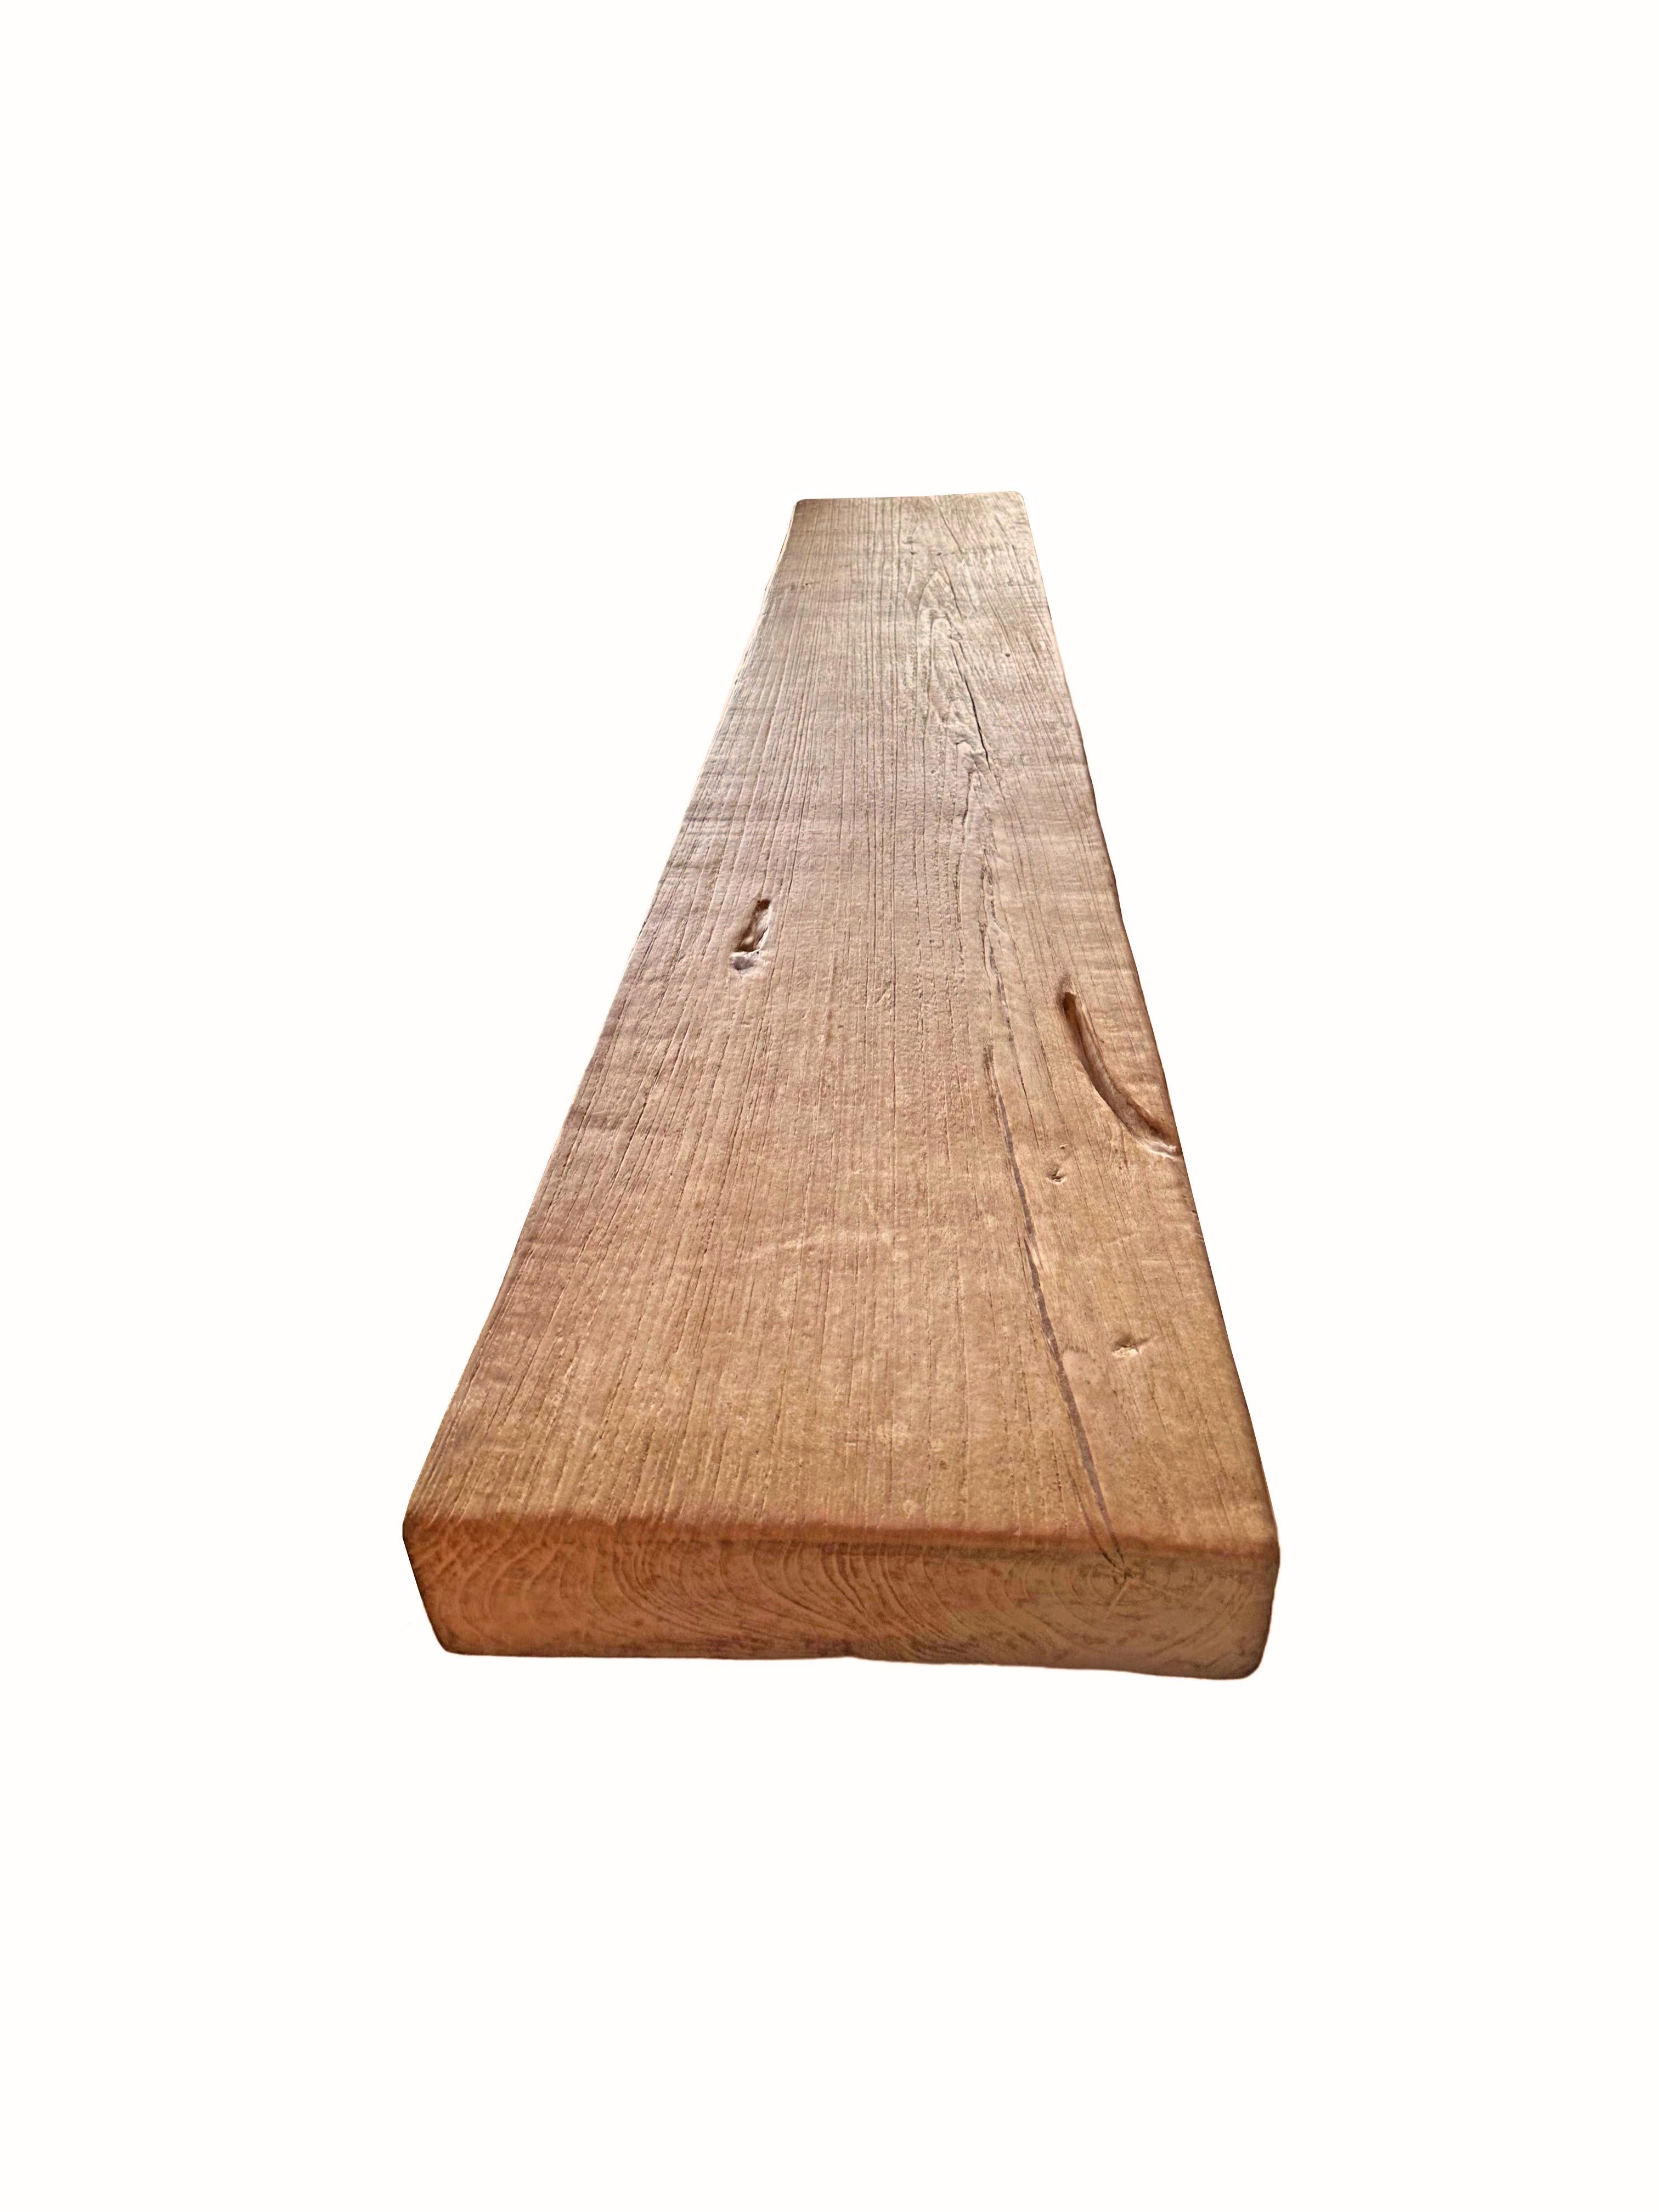 Solid Teak Wood Sculptural Bench, Modern Organic For Sale 1